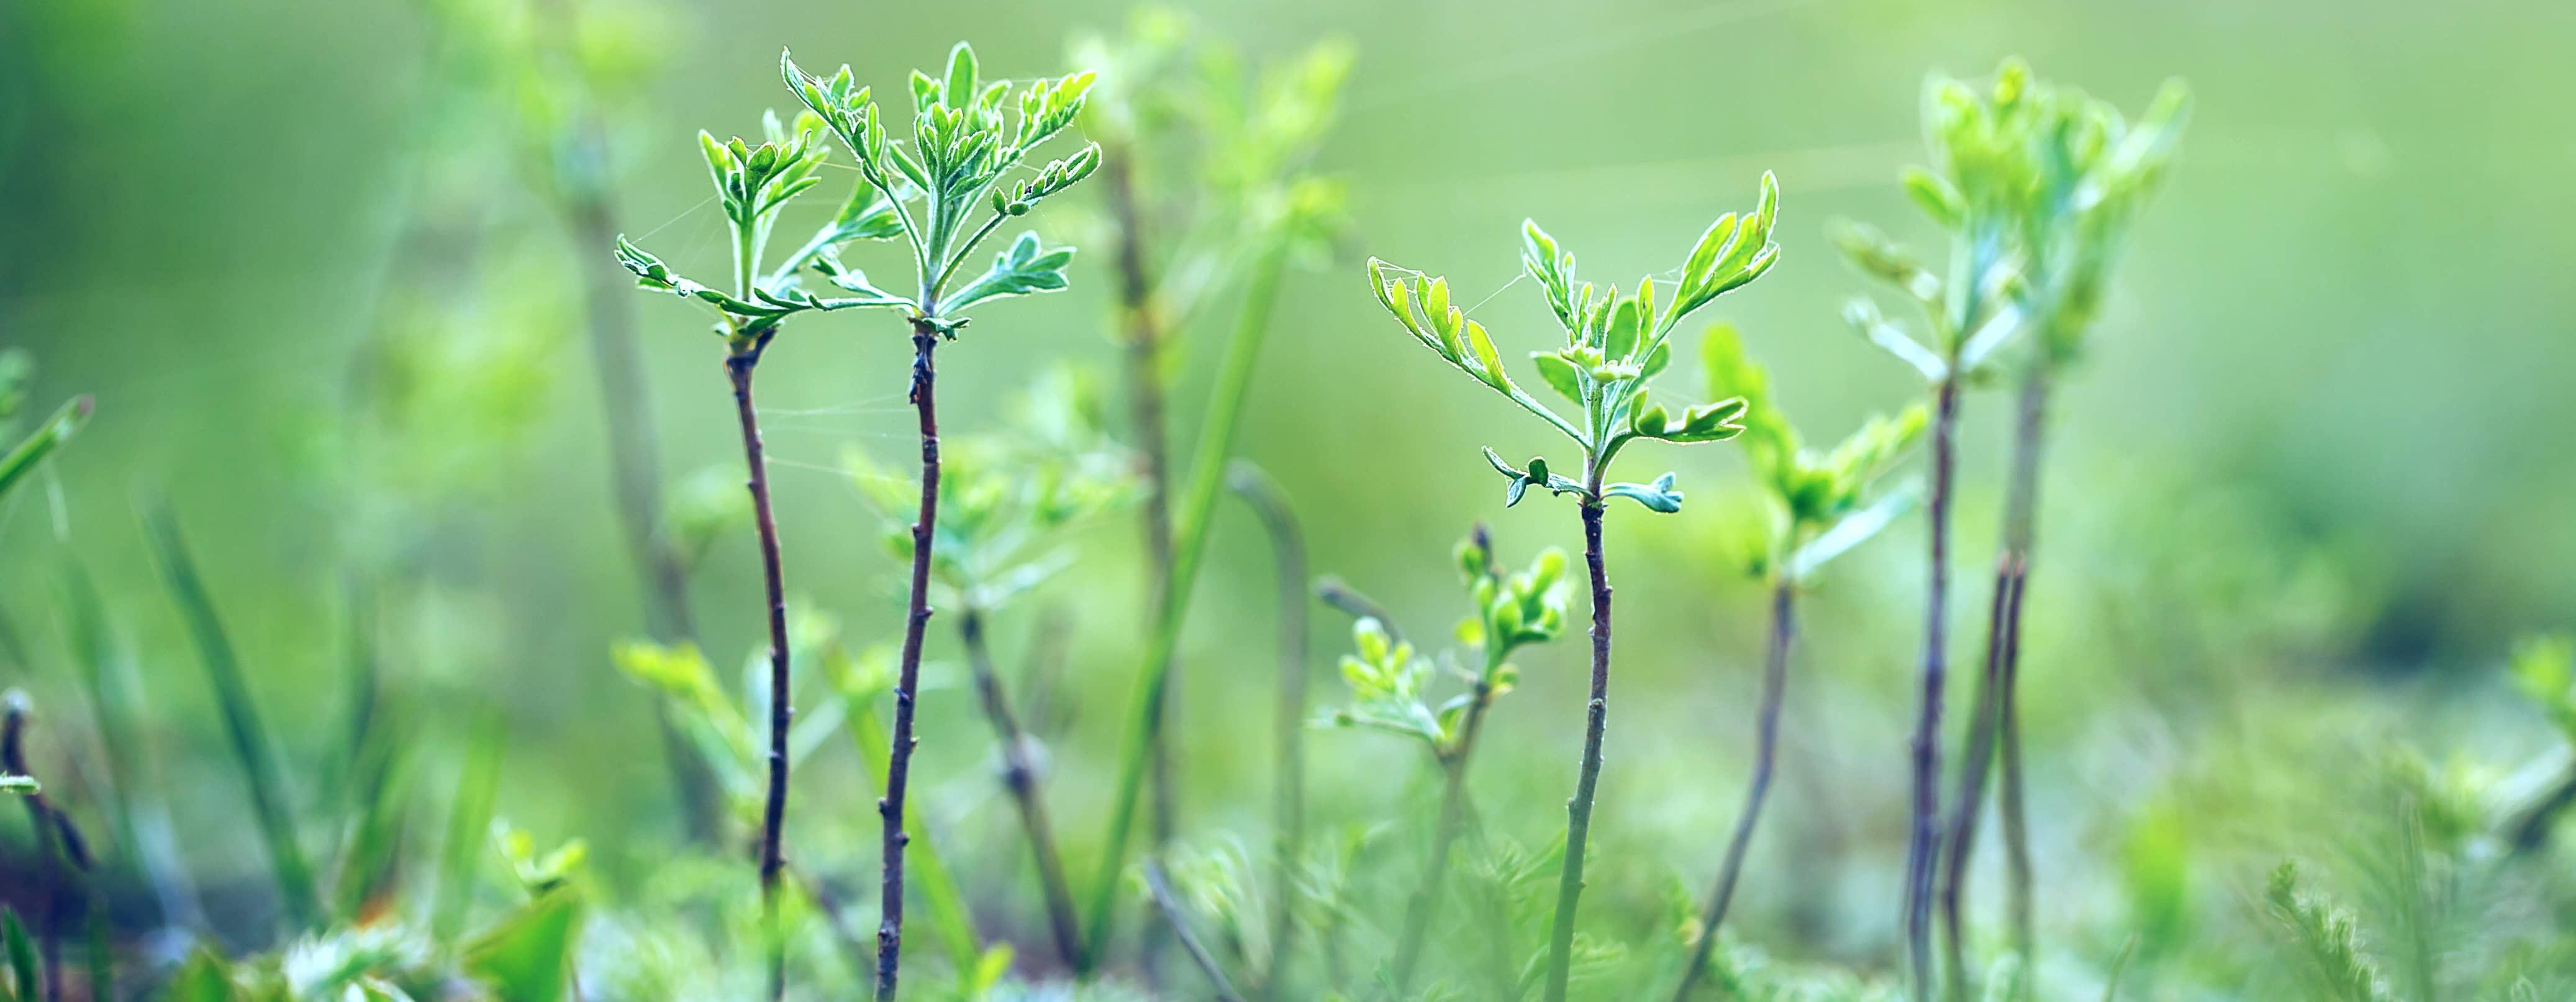 Closeup of small green plants